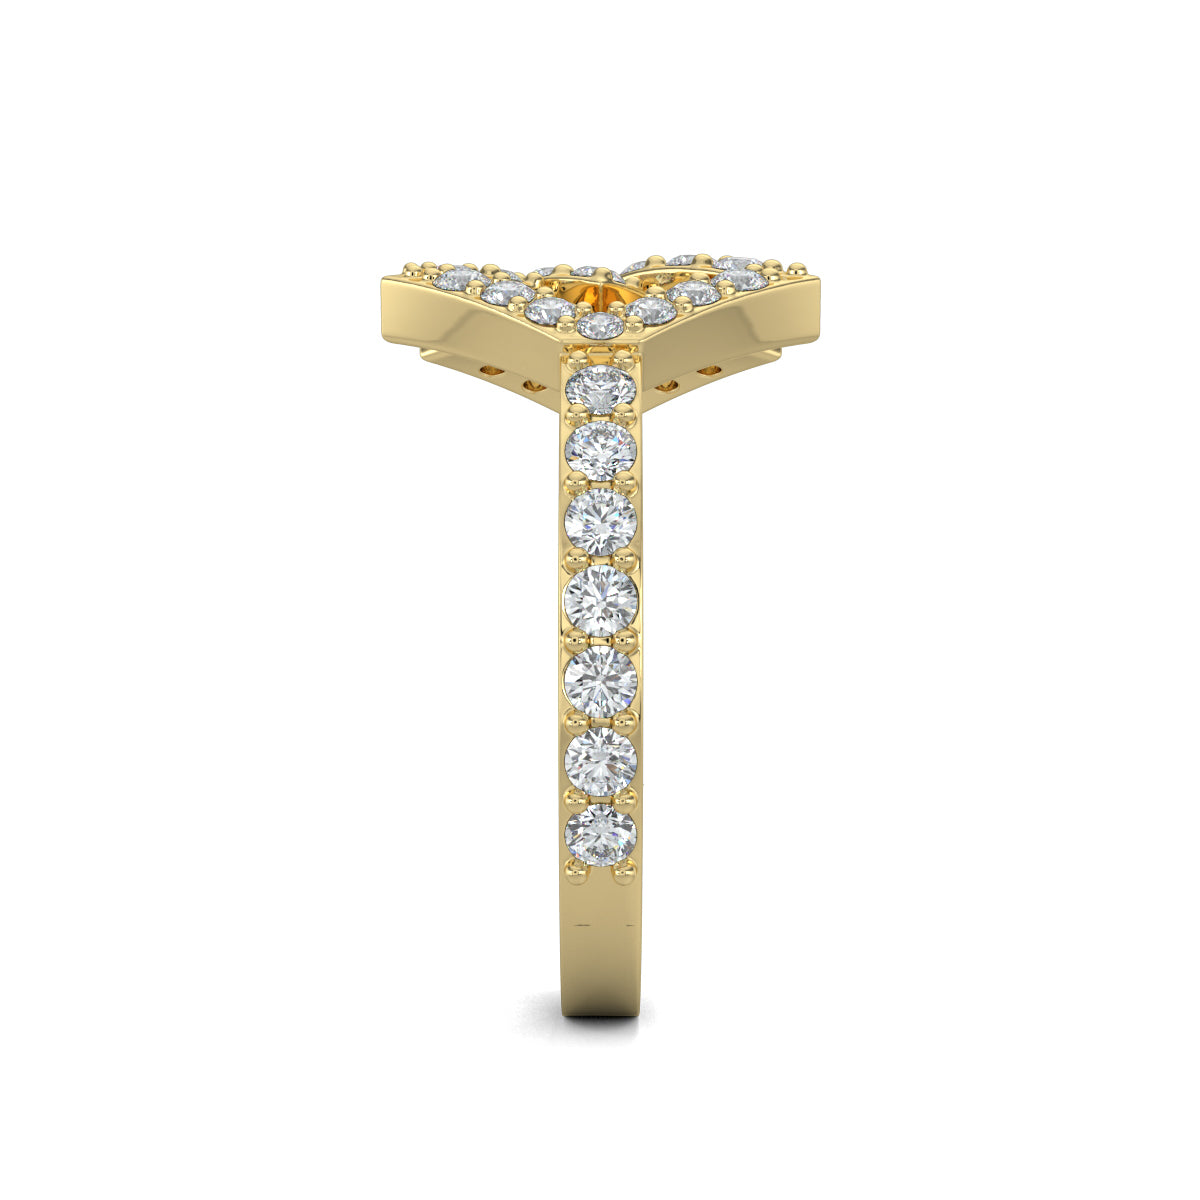 Yellow Gold, Diamond Ring, Natural diamond ring, Lab-grown diamond ring, intertwined diamond design, round diamond accents, unity symbol ring, elegant diamond band.